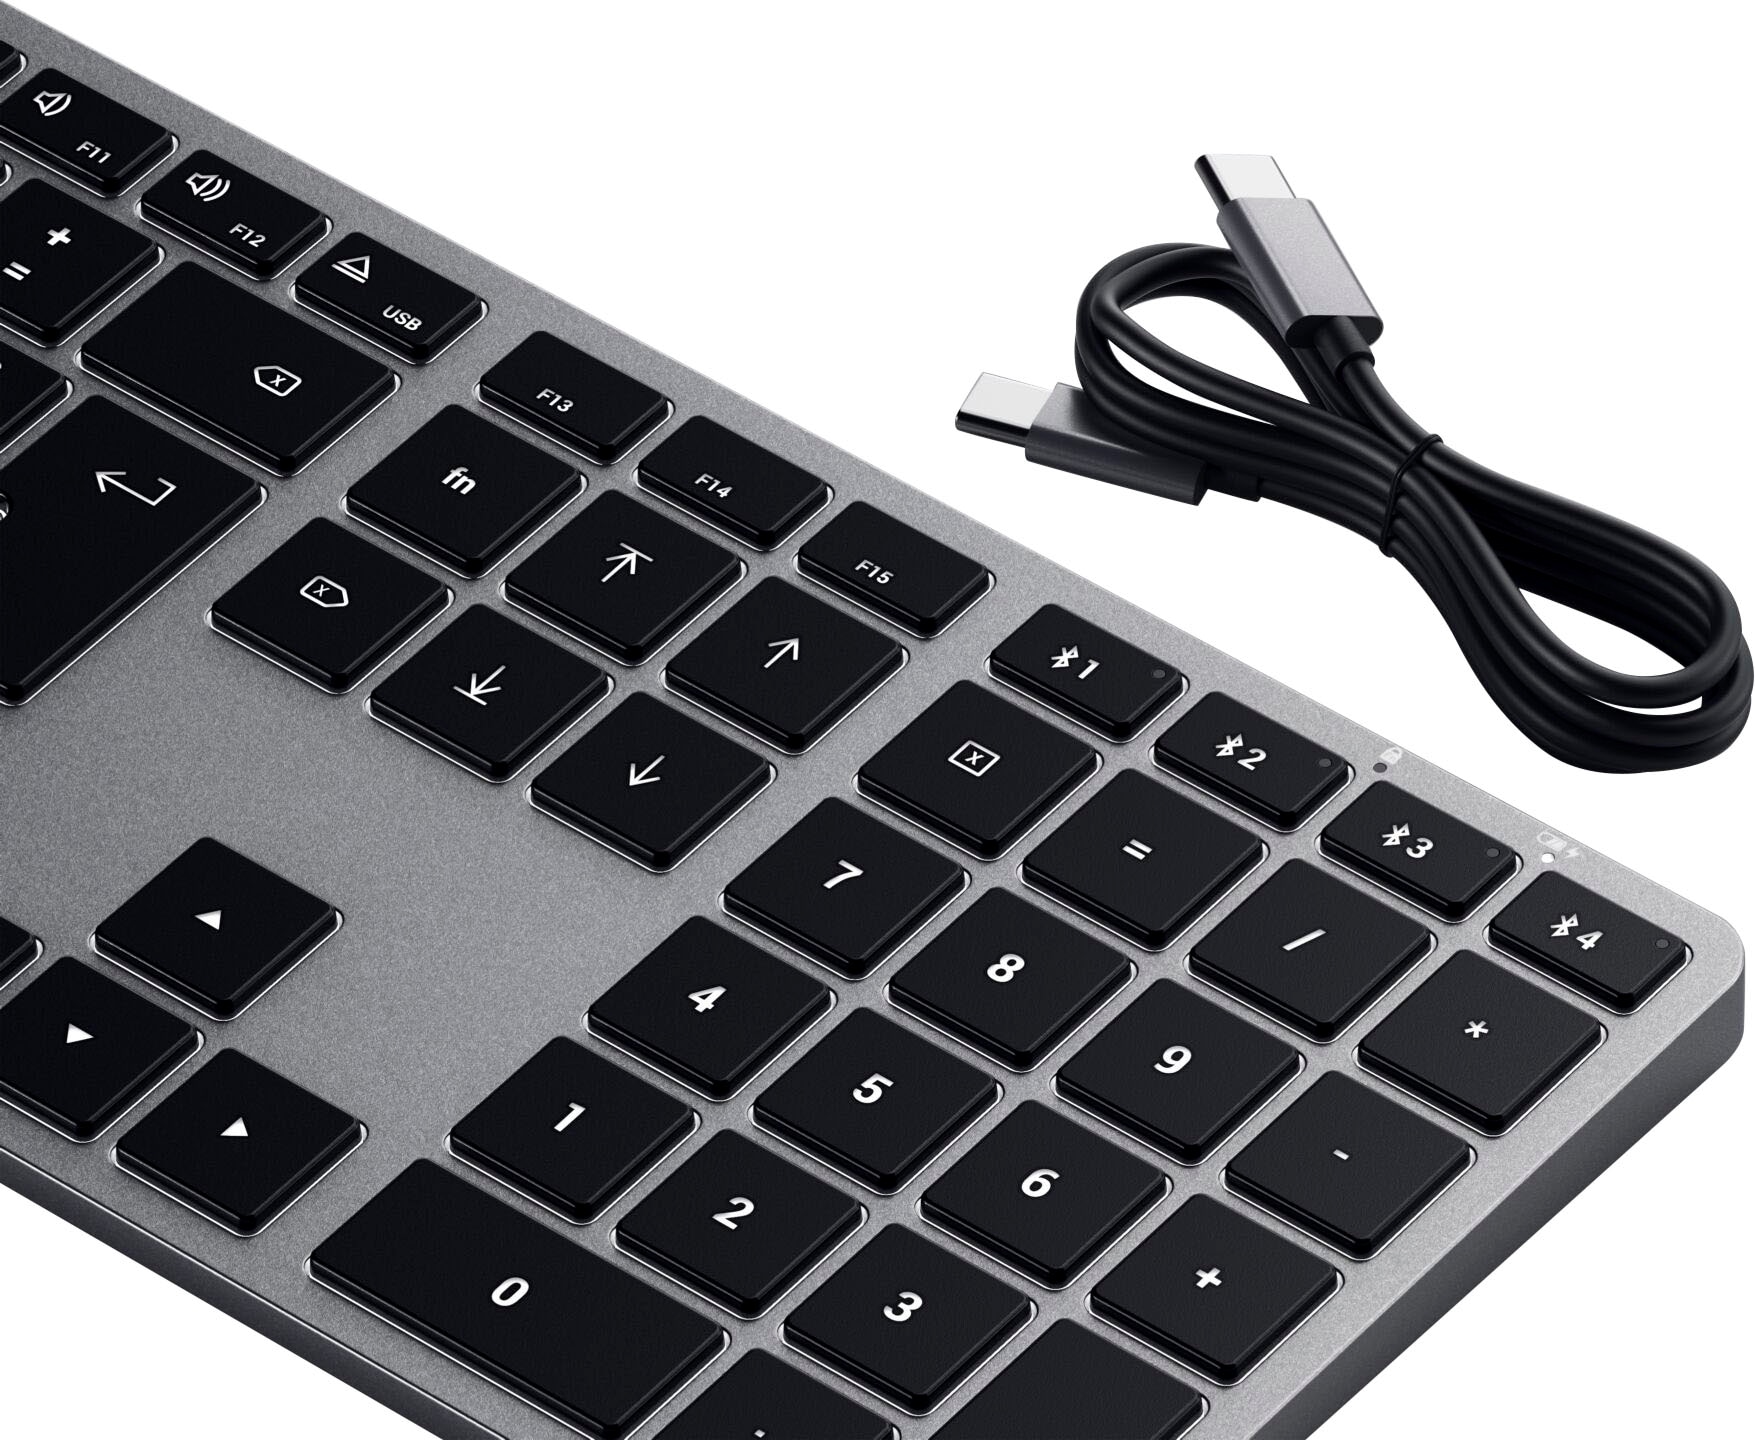 Satechi Tastatur »Slim X3 Bluetooth Keyboard-DE (German)«, (Funktionstasten-Multimedia-Tasten-USB-Anschluss-Ziffernblock)